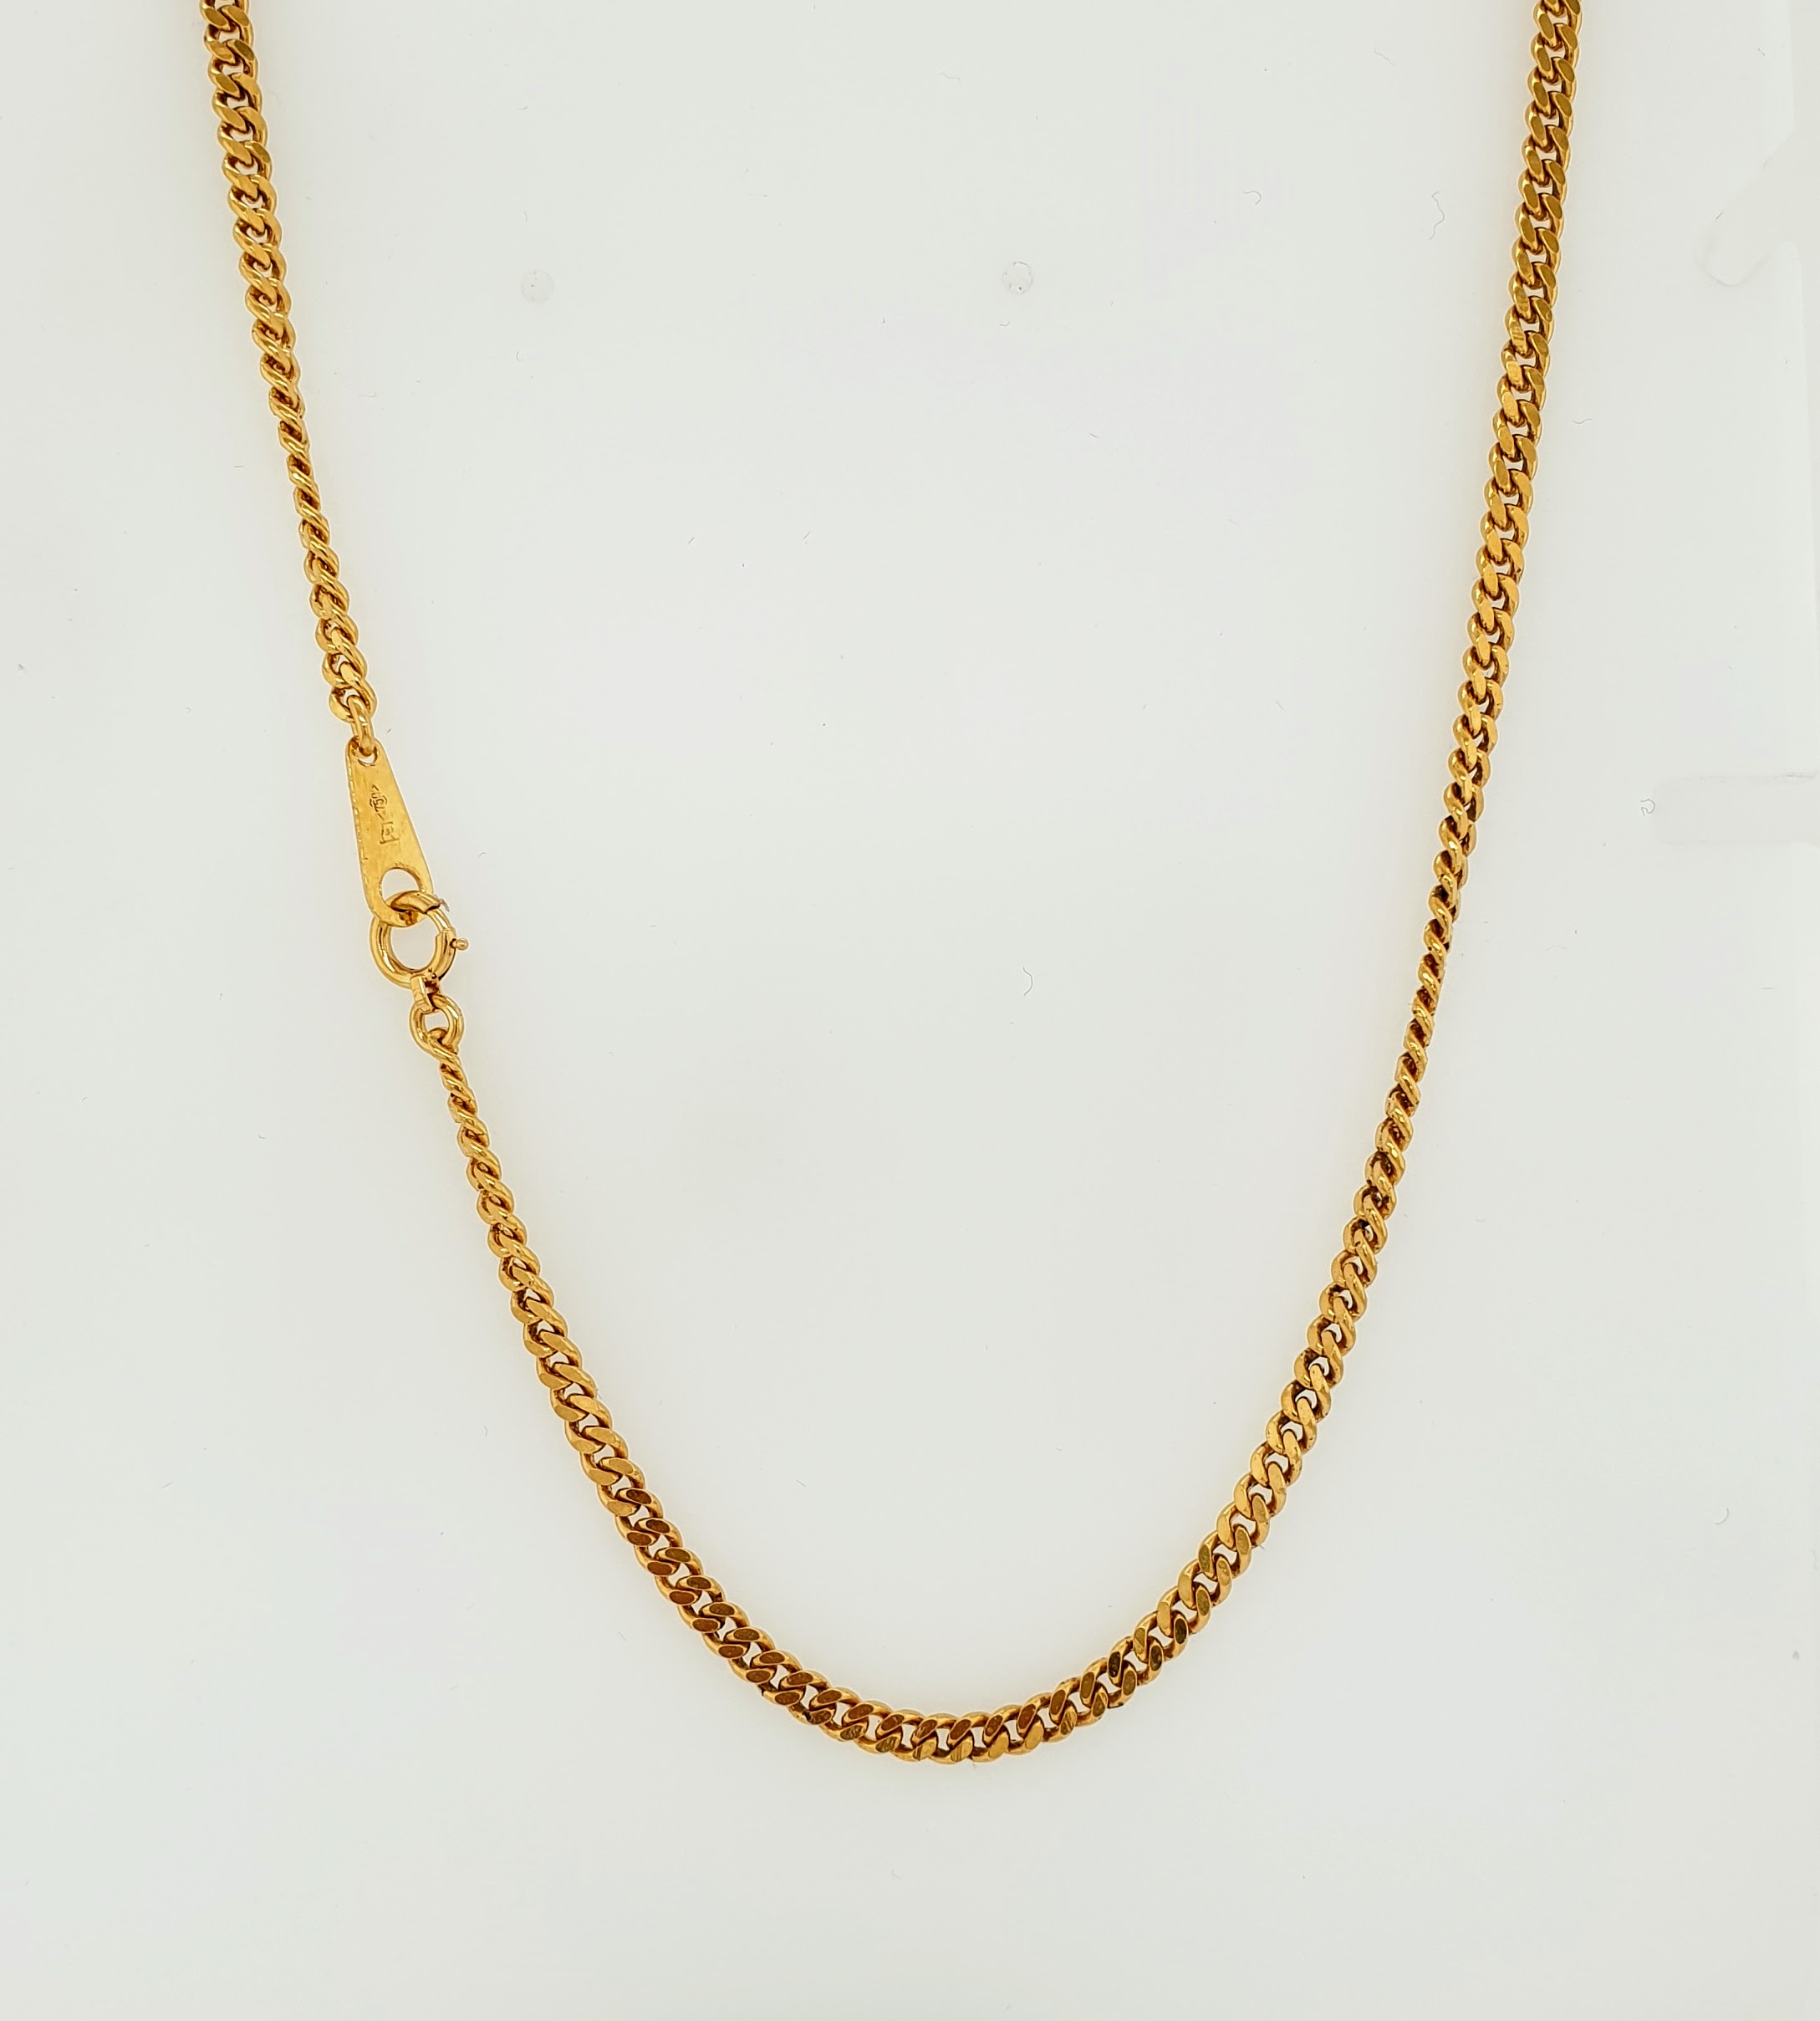 sensatie landheer strottenhoofd 18 Karaat gouden ketting, vintage. 40 cm en 2.5 mm dik. Gourmette #24938 |  Goudsmederij/Juwelier Arnold van Dodewaard